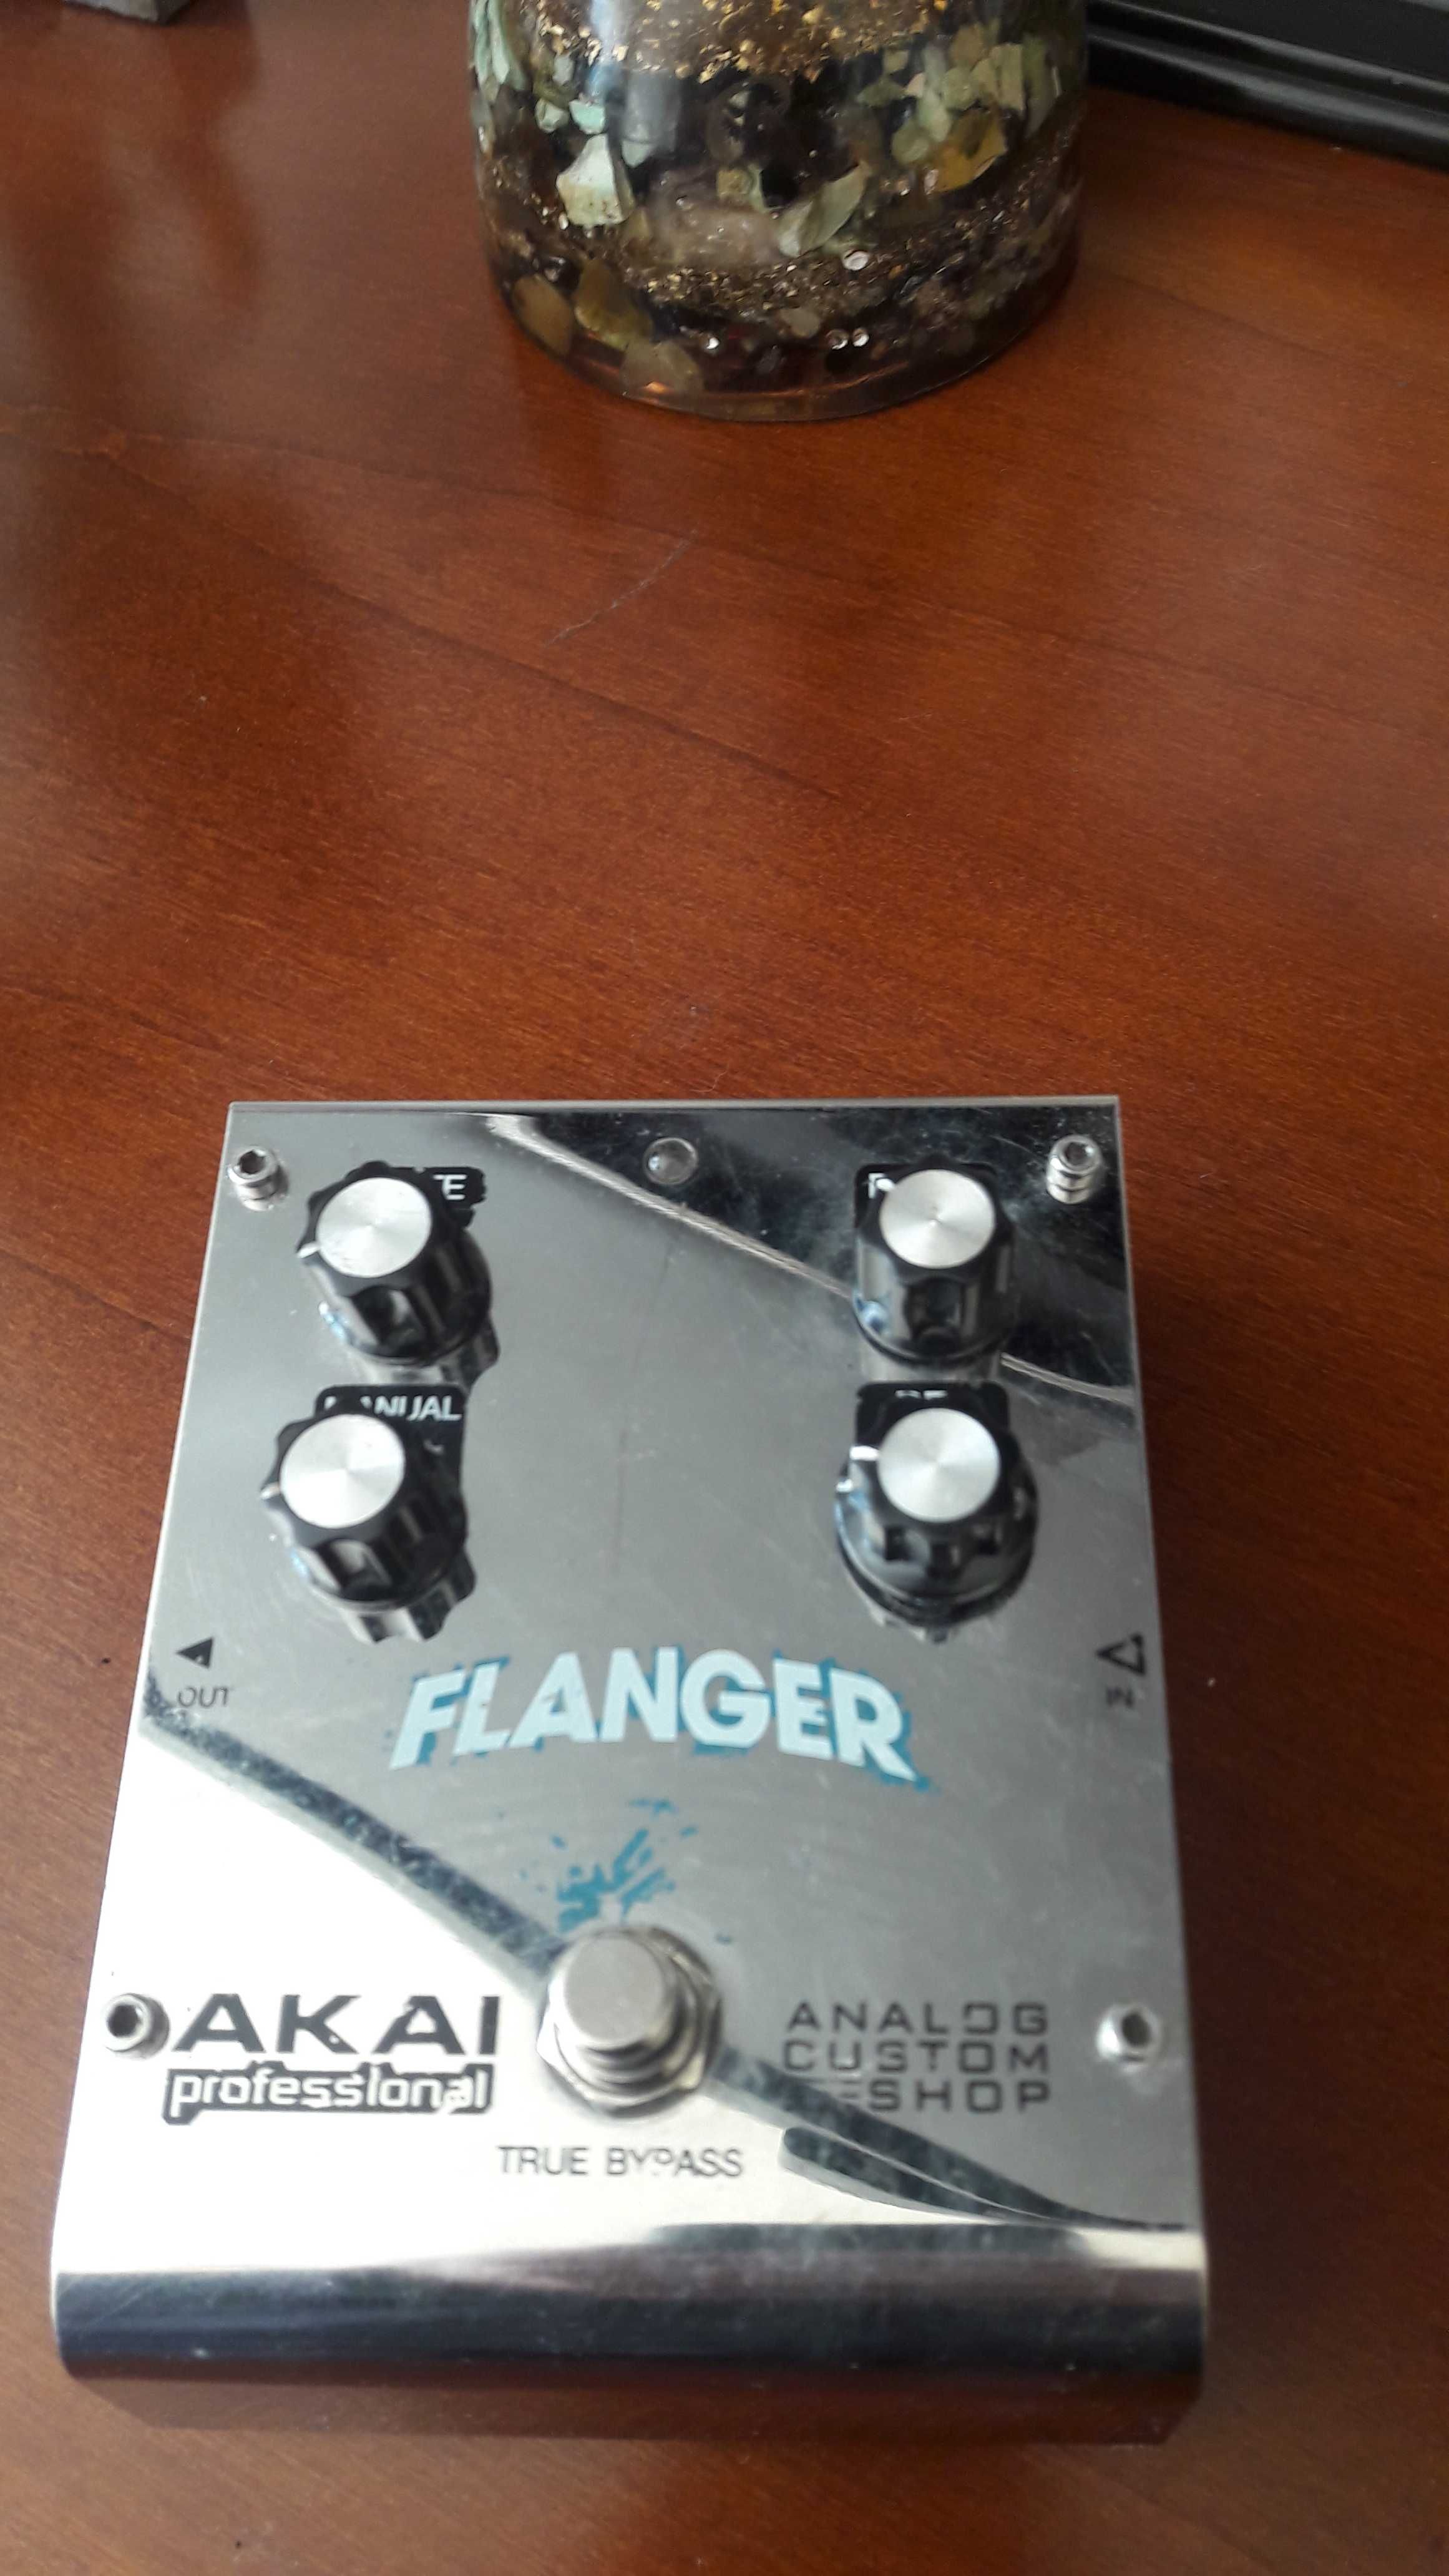 Akai Flanger analog custom